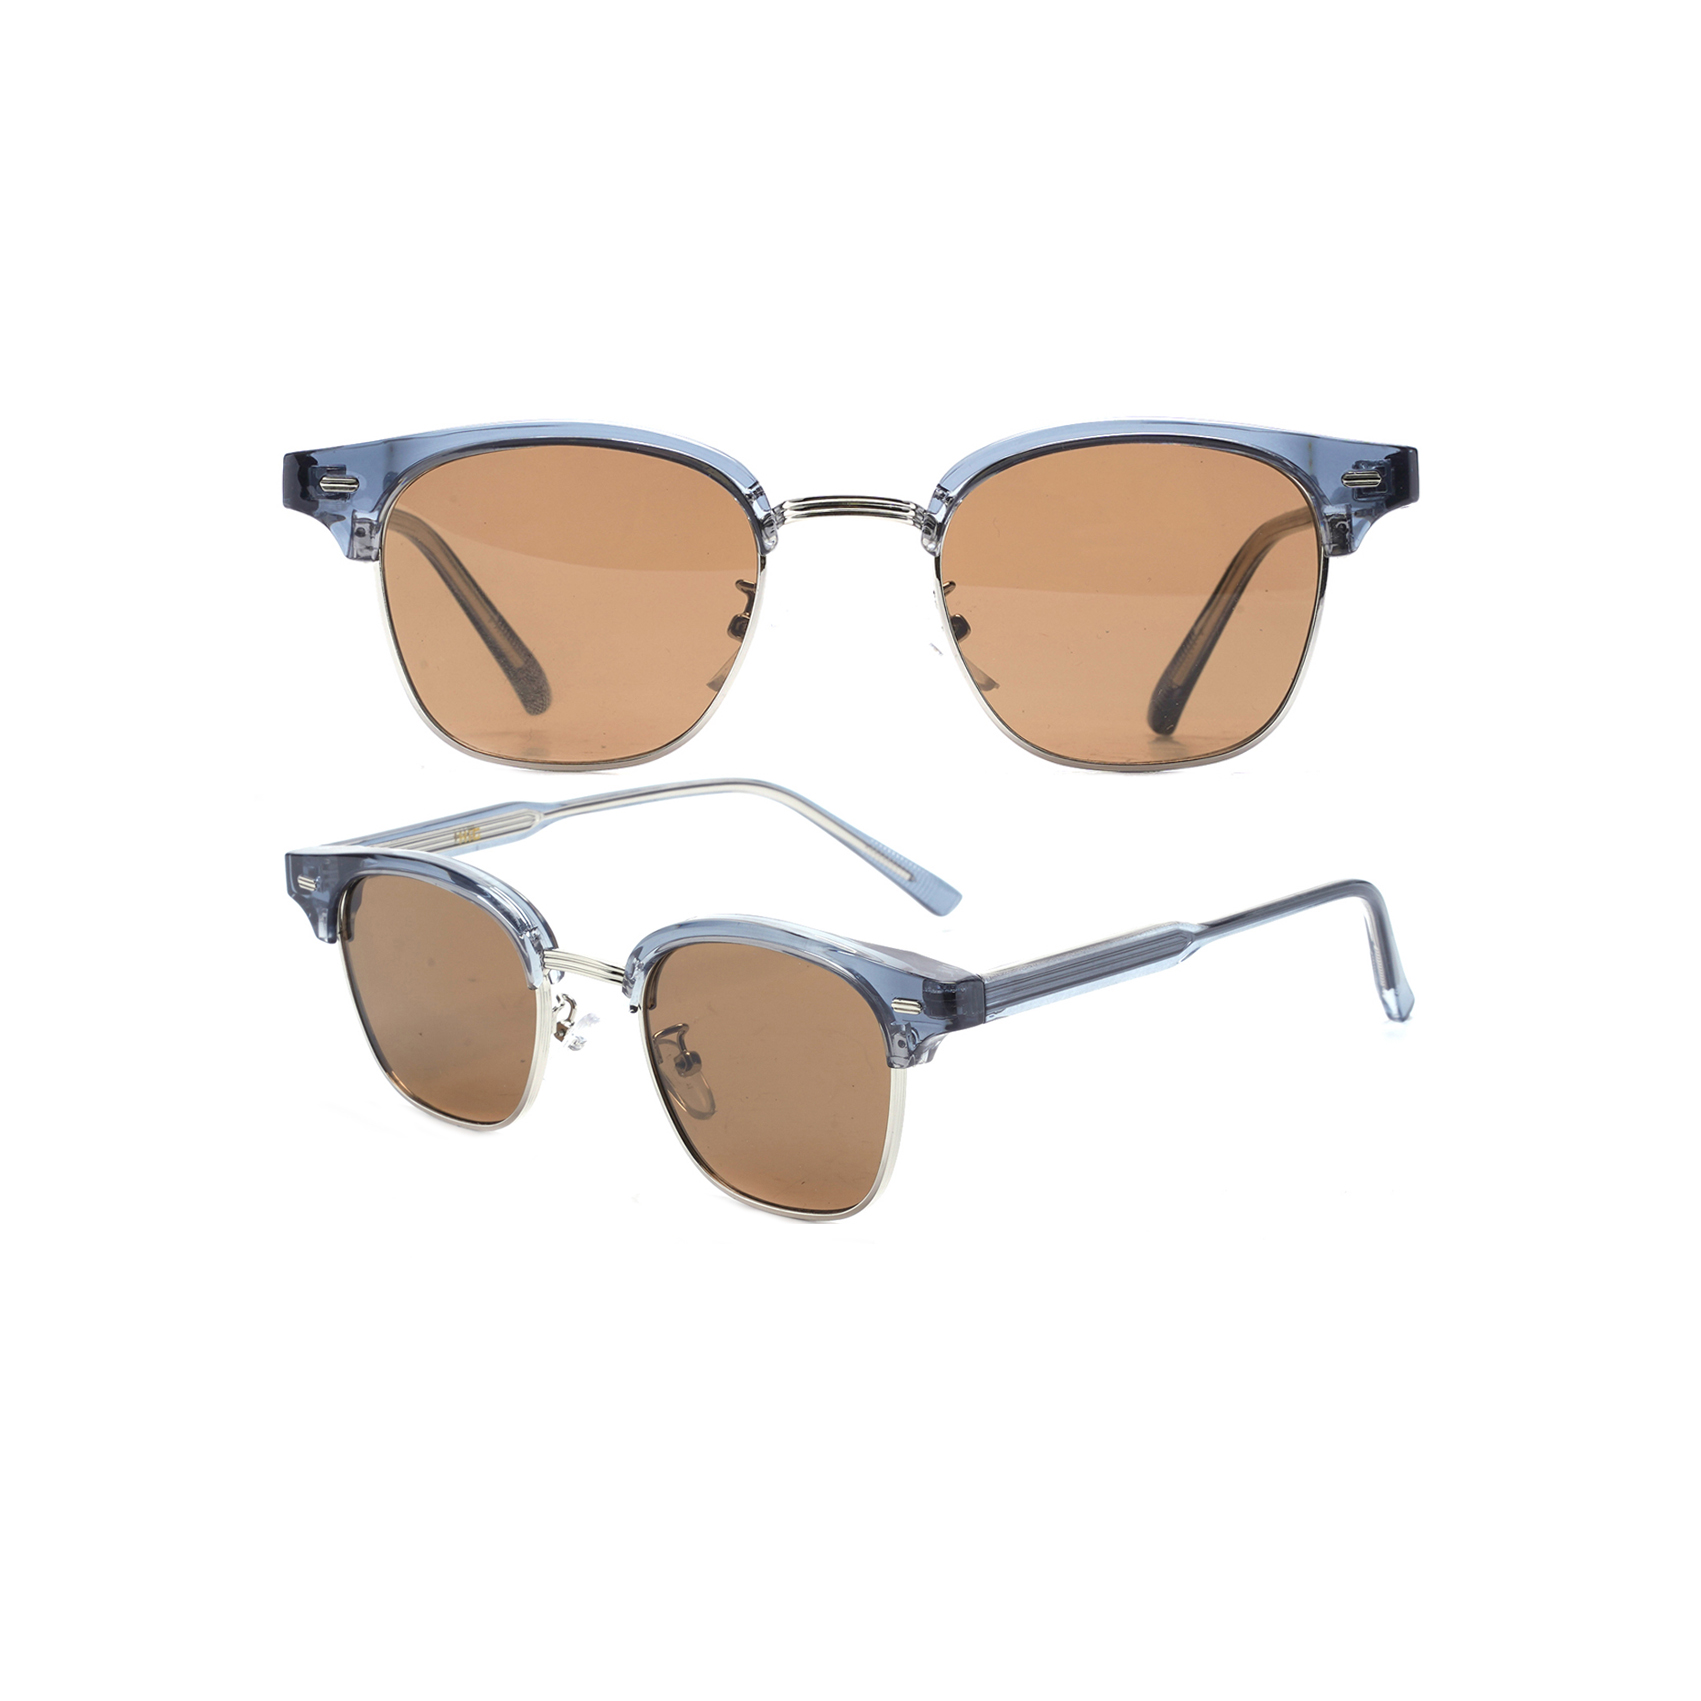 Classic Simple Women's Clubmaster Sunglasses Acetate Sunglasses Manufacturer